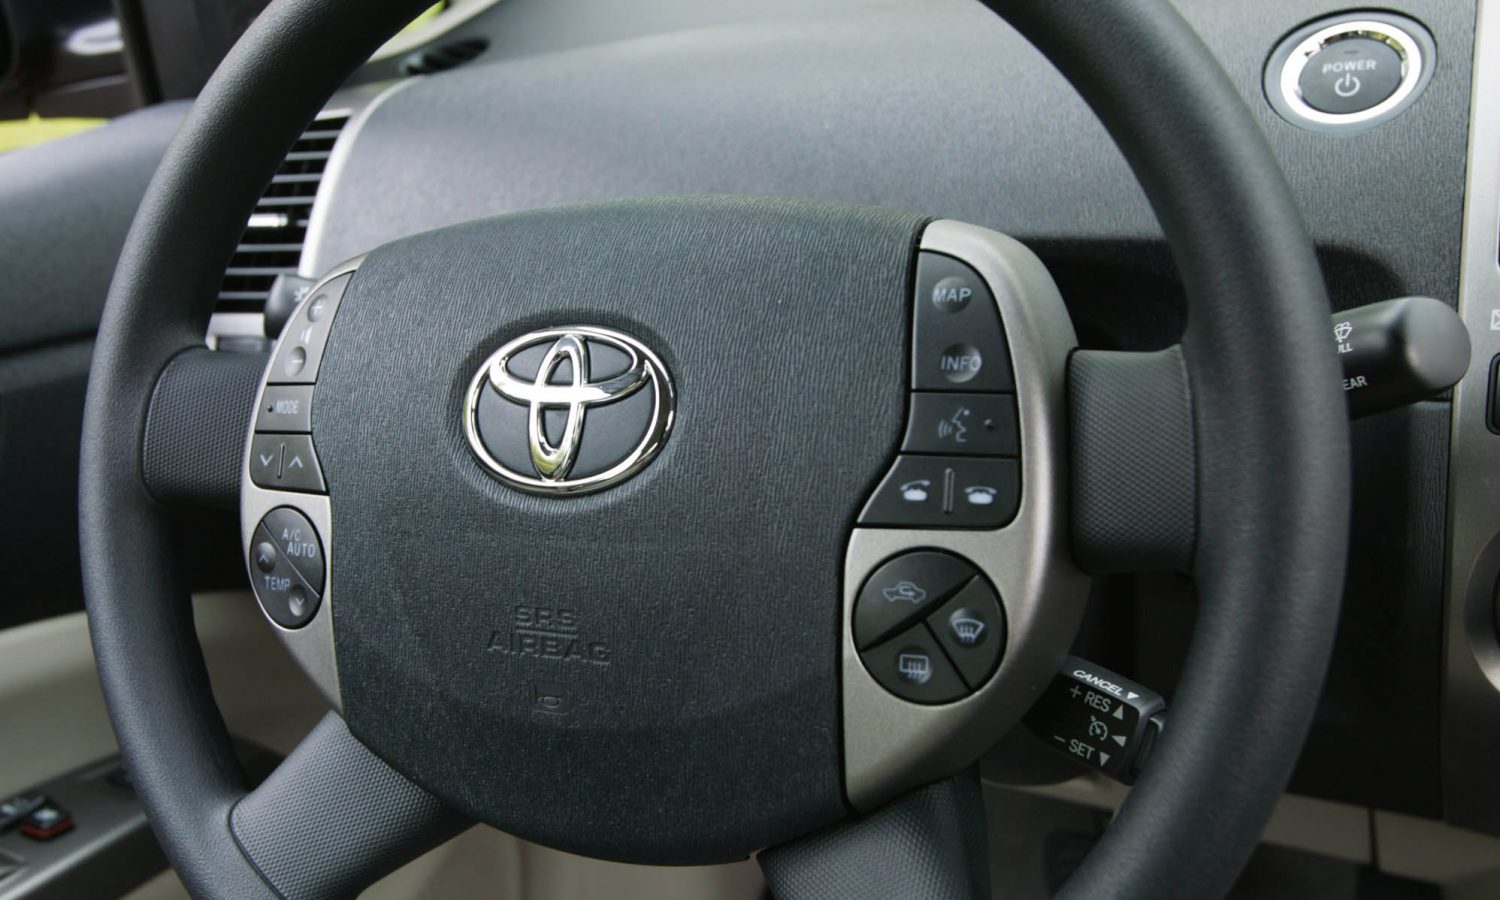 2007 - 2009 Toyota Prius - 041 - Toyota USA Newsroom